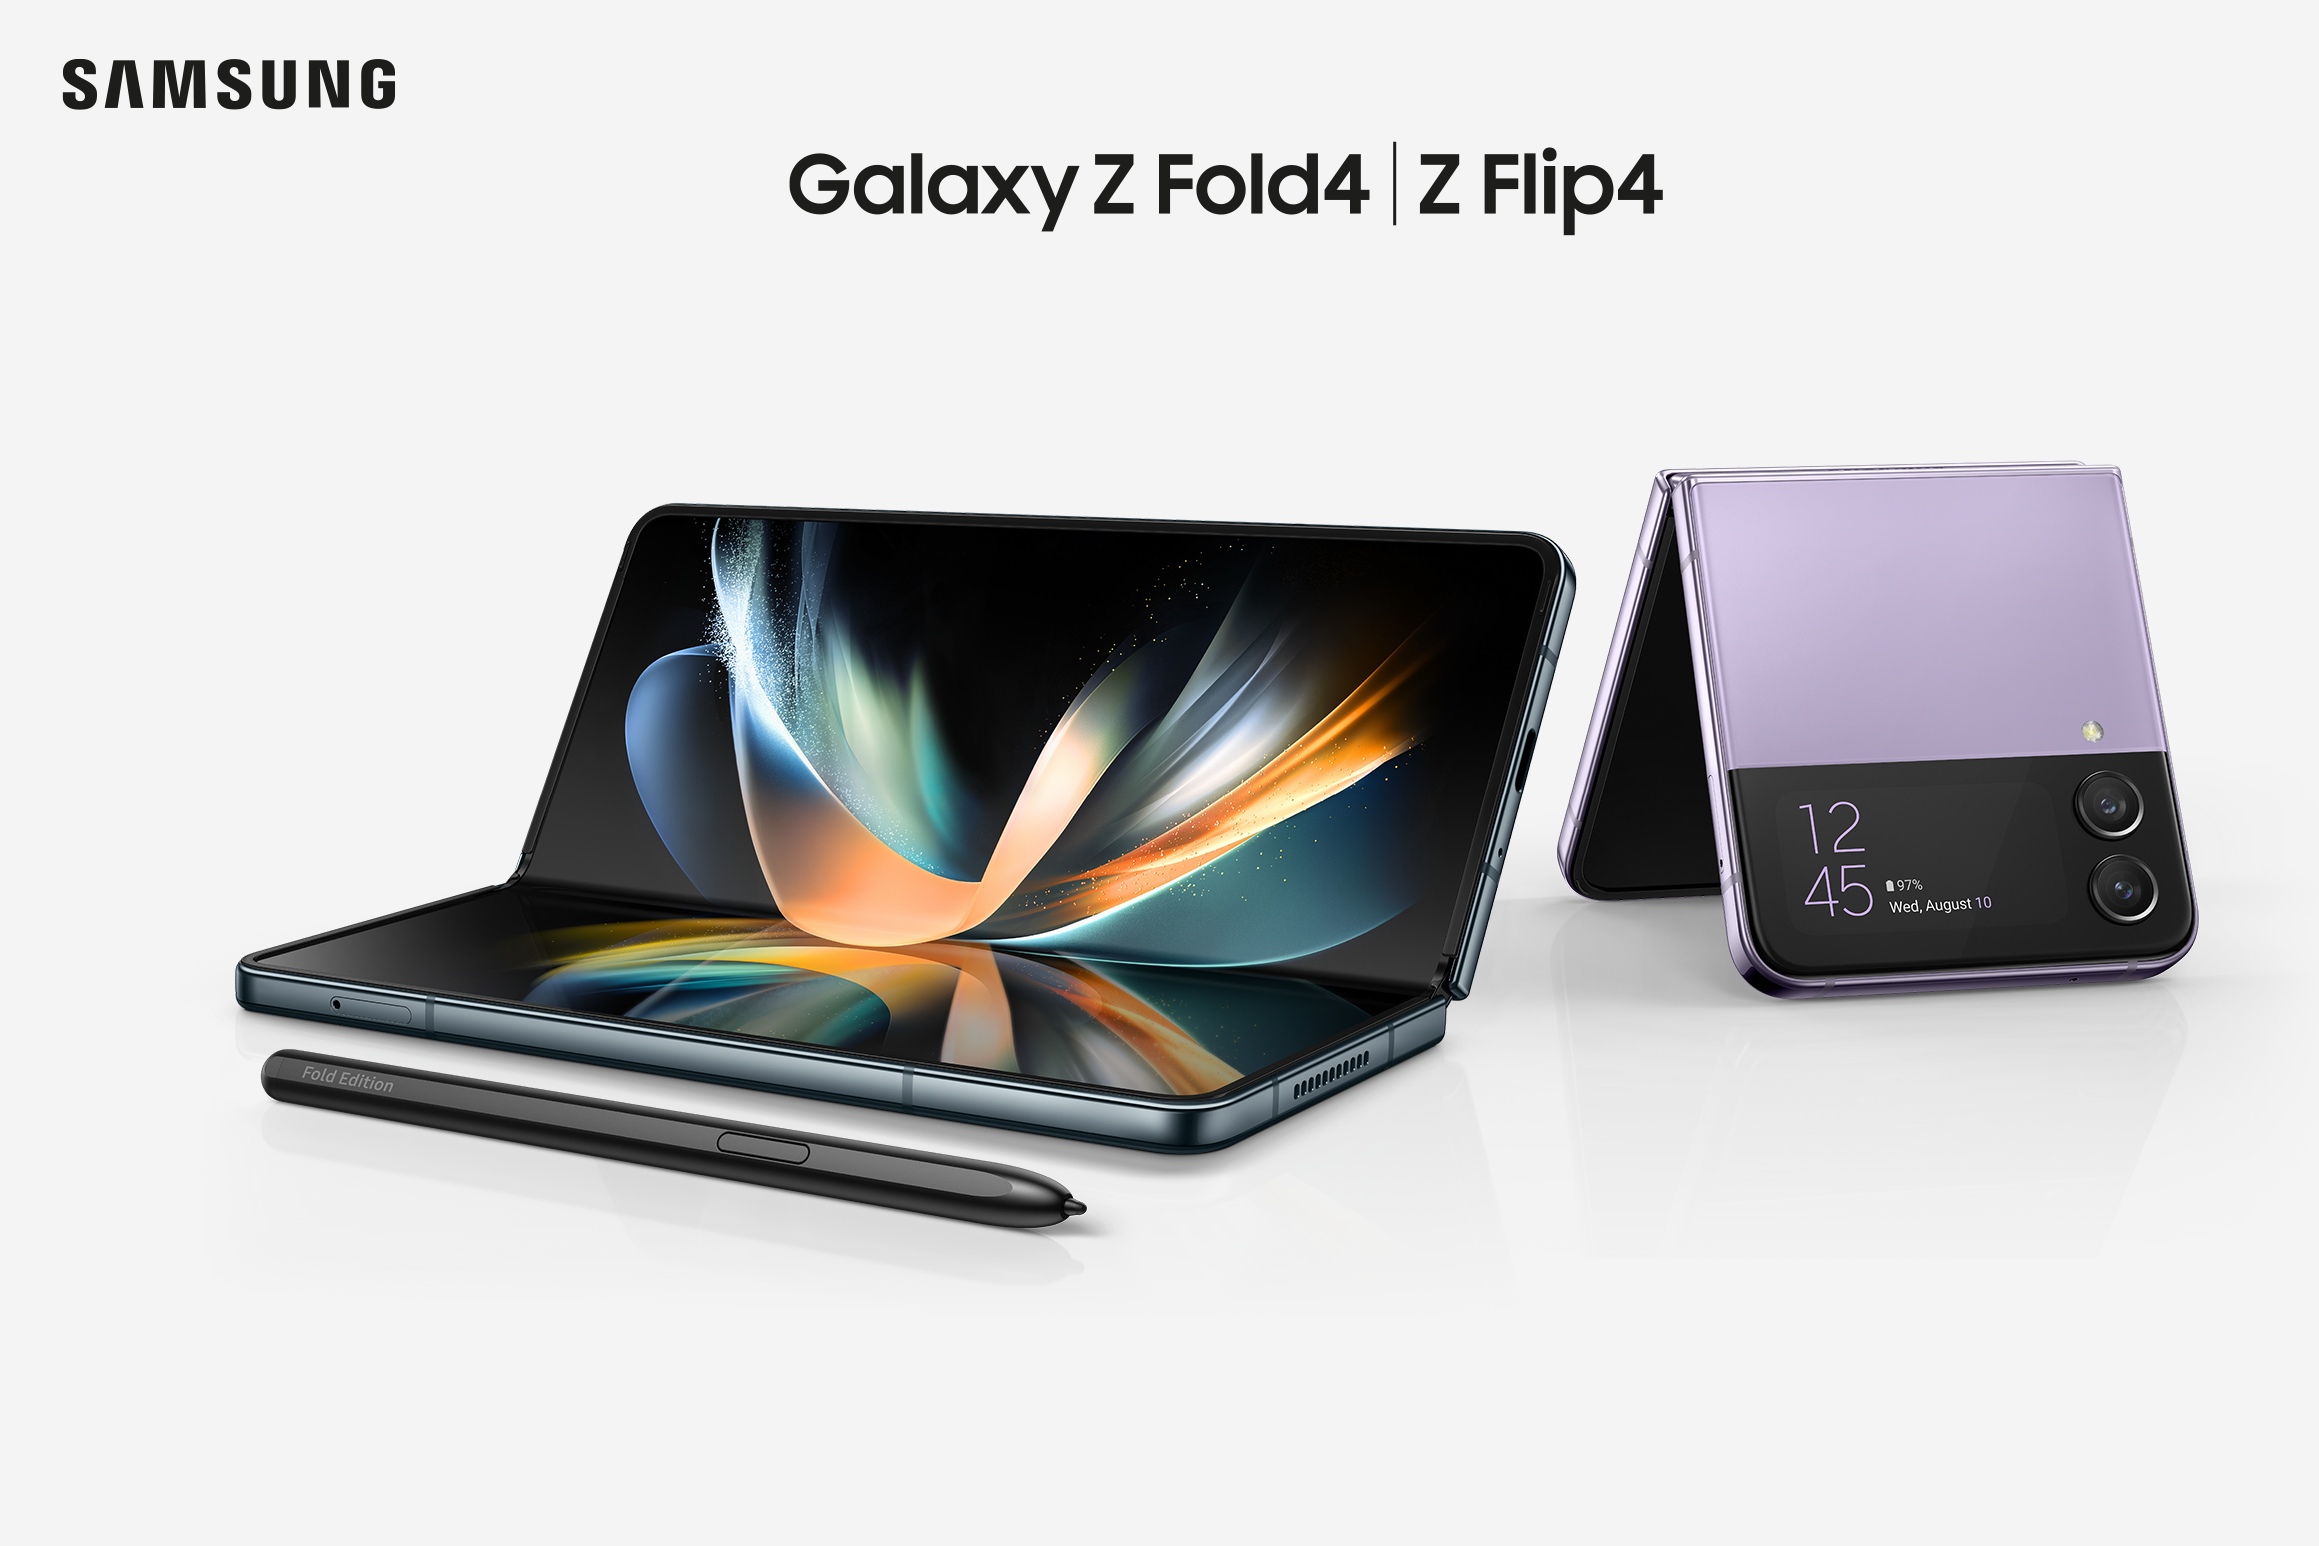 Pre-order the new Samsung Galaxy Z Flip4 and Z Fold4 on EVO